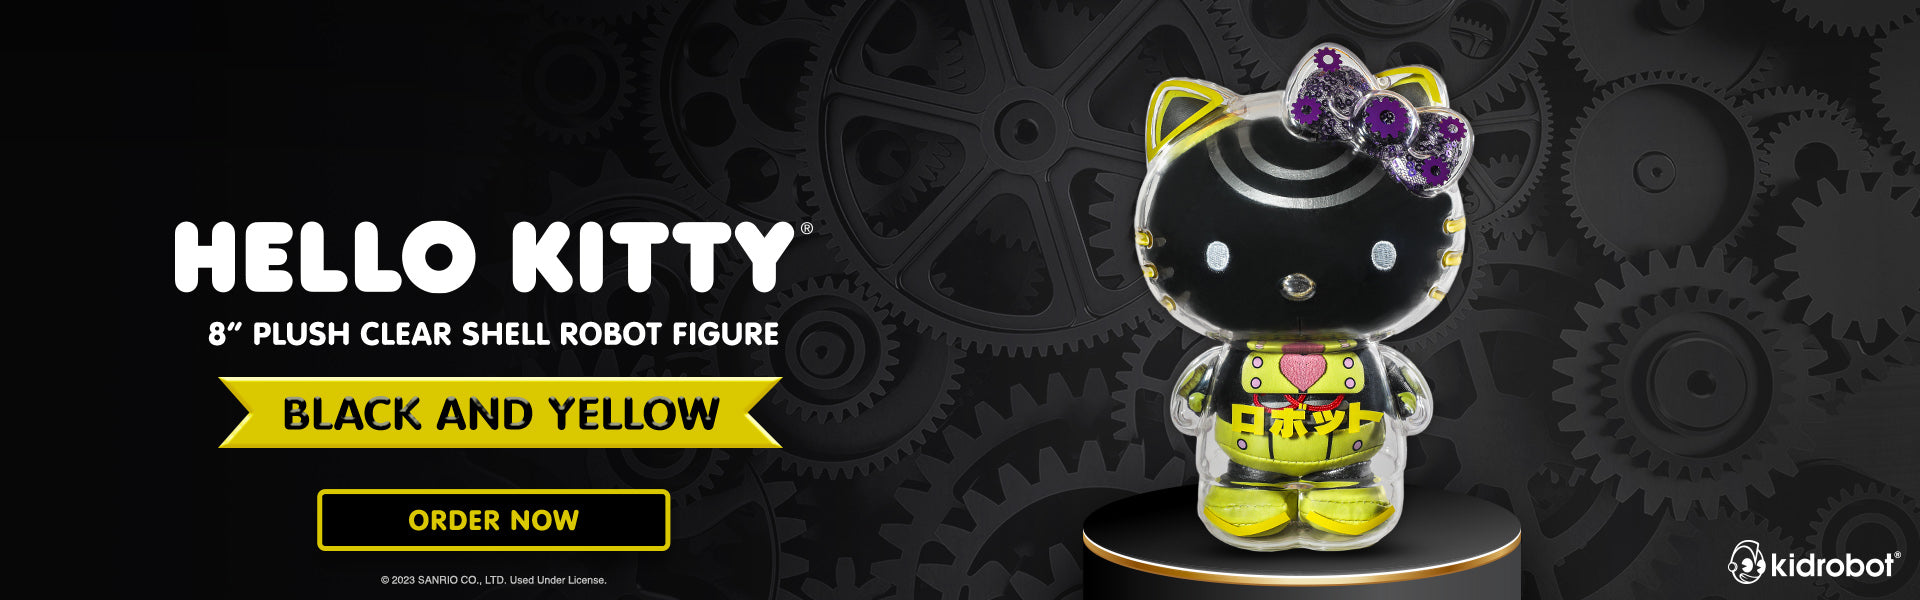 BLACK FRIDAY! Hello Kitty® 8” Plush Clear Shell Robot Figure - Kidrobot.com Exclusive